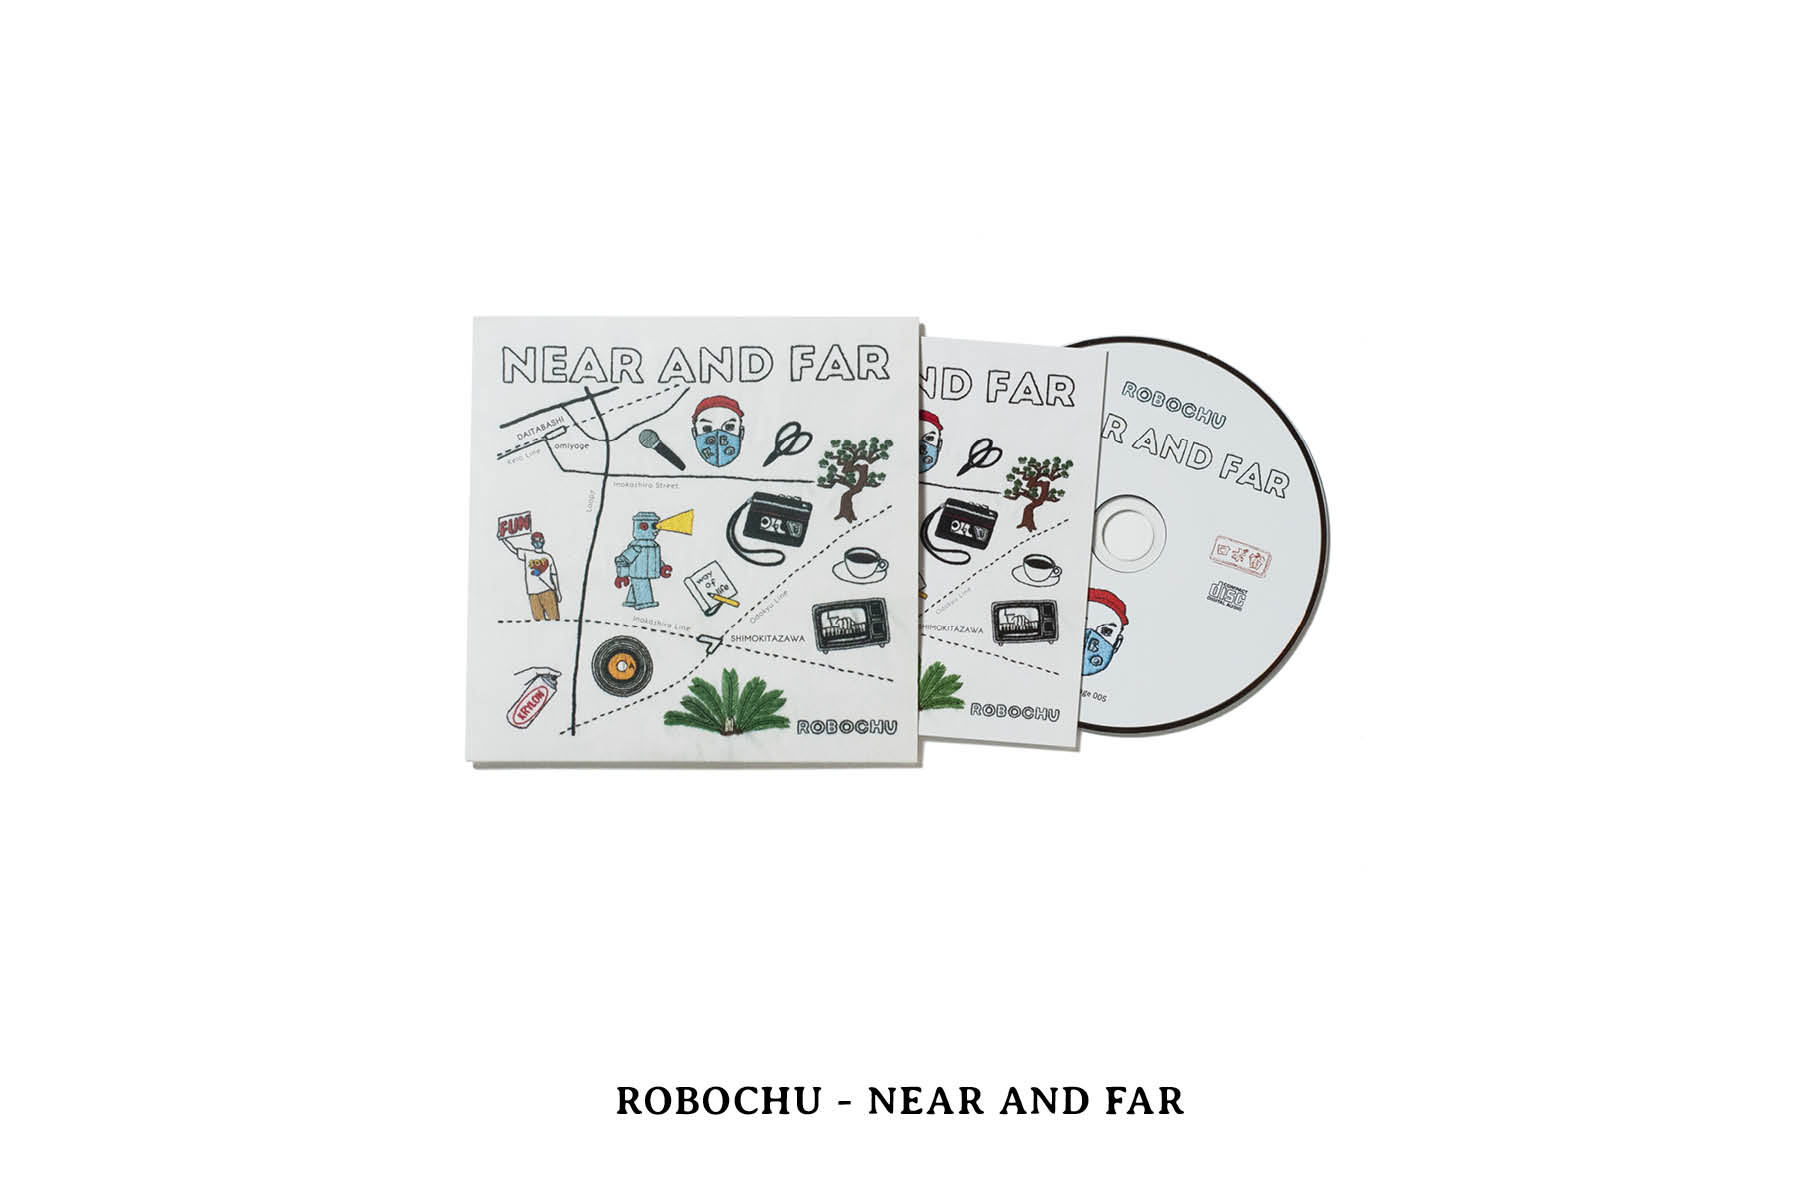 ROBOCHU - NEAR AND FAR